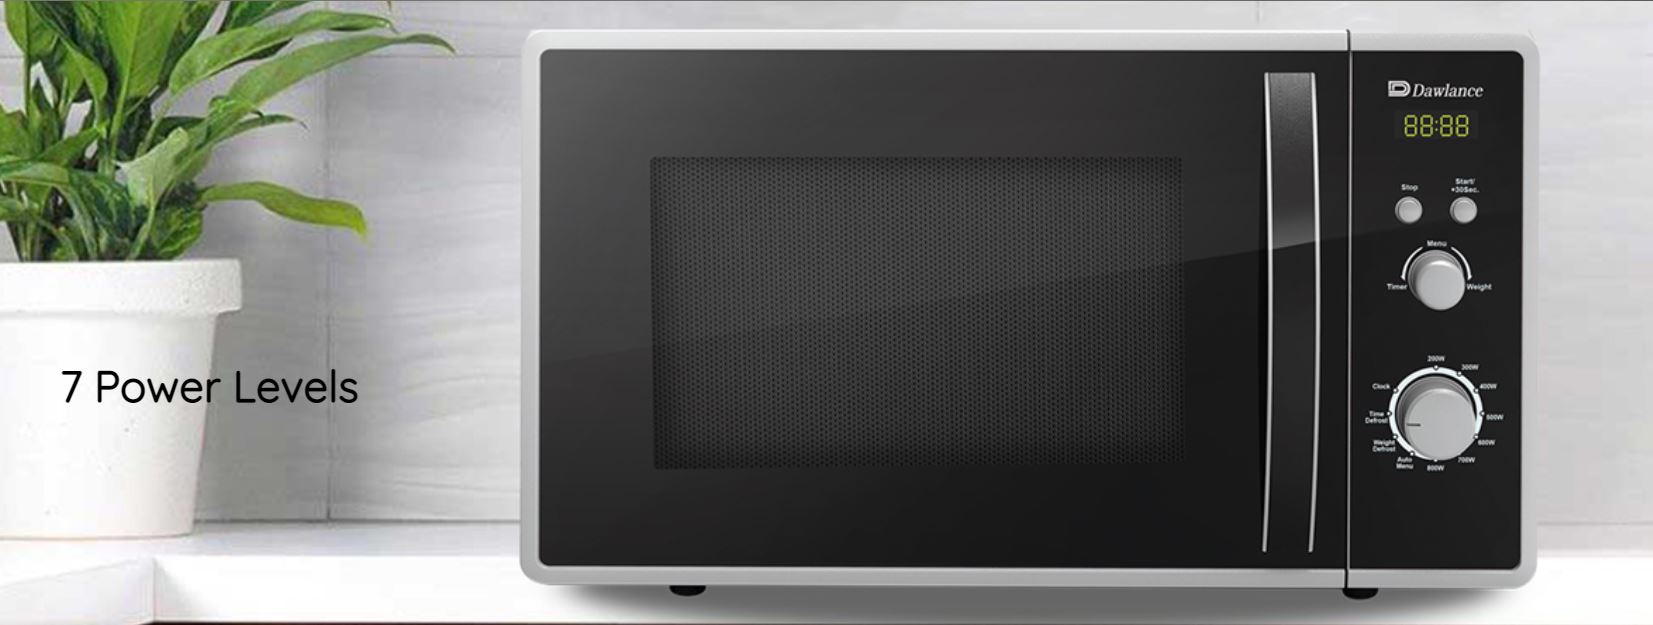 DAWLANCE MD-10 - Heating Microwave Oven